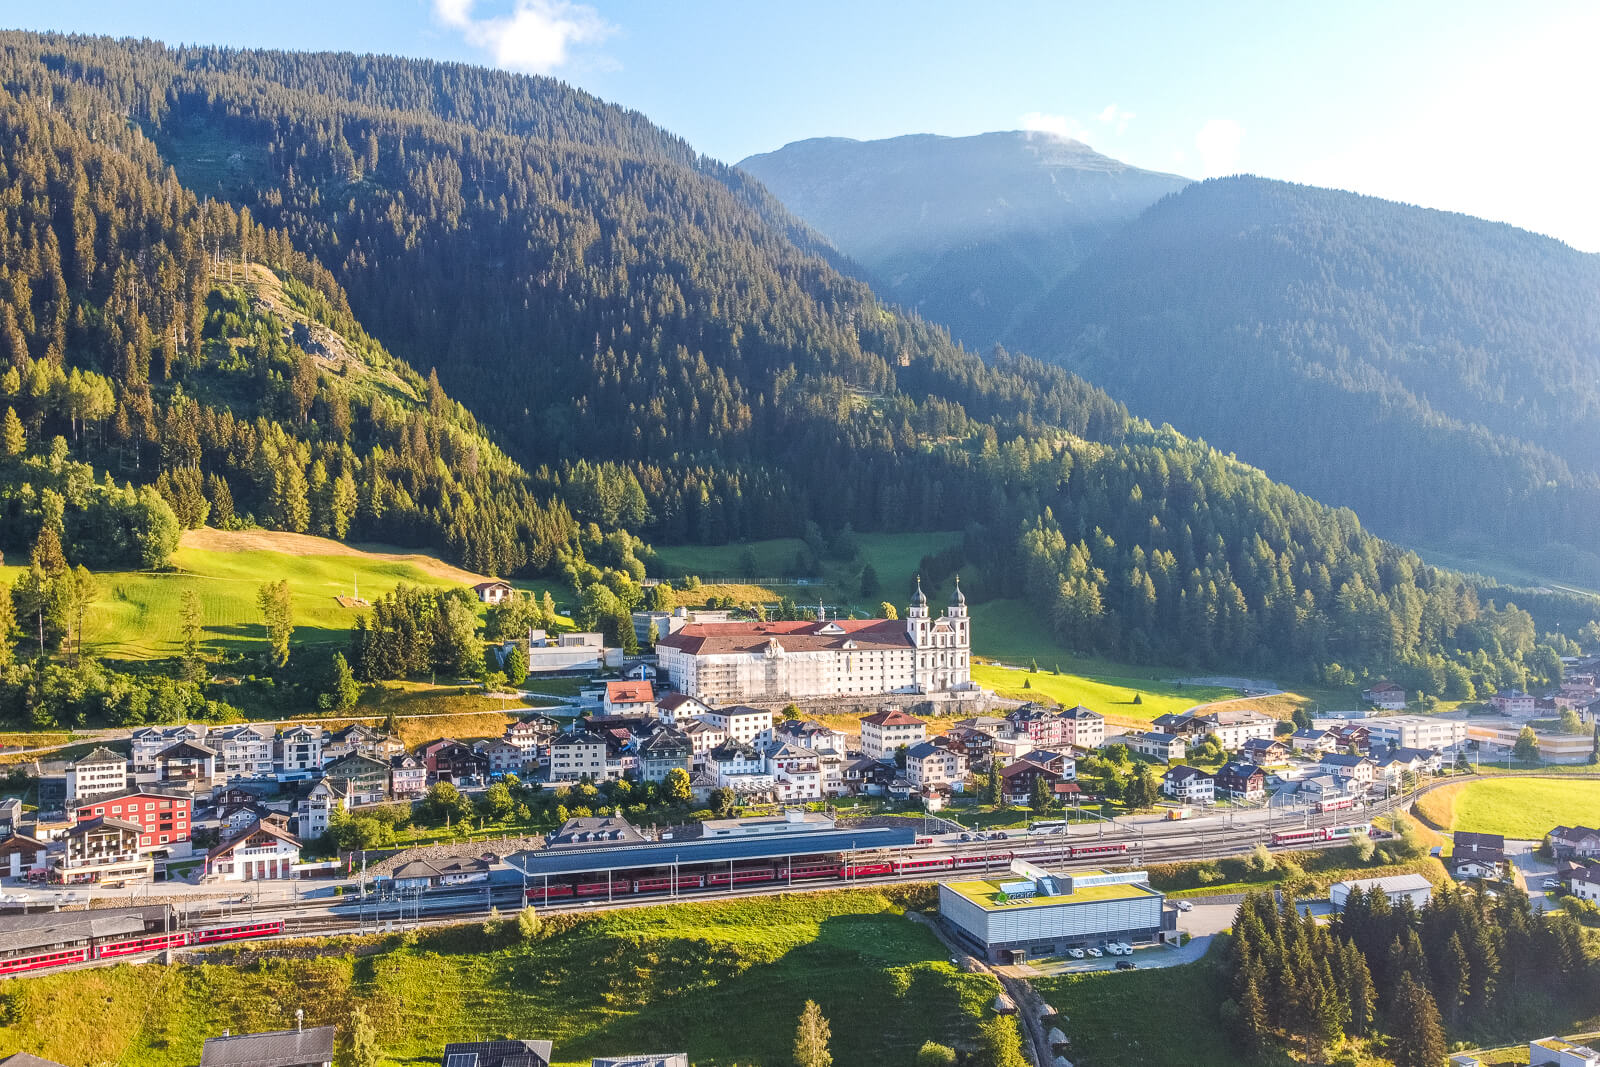 Architecture of the Disentis Monastery in Switzerland